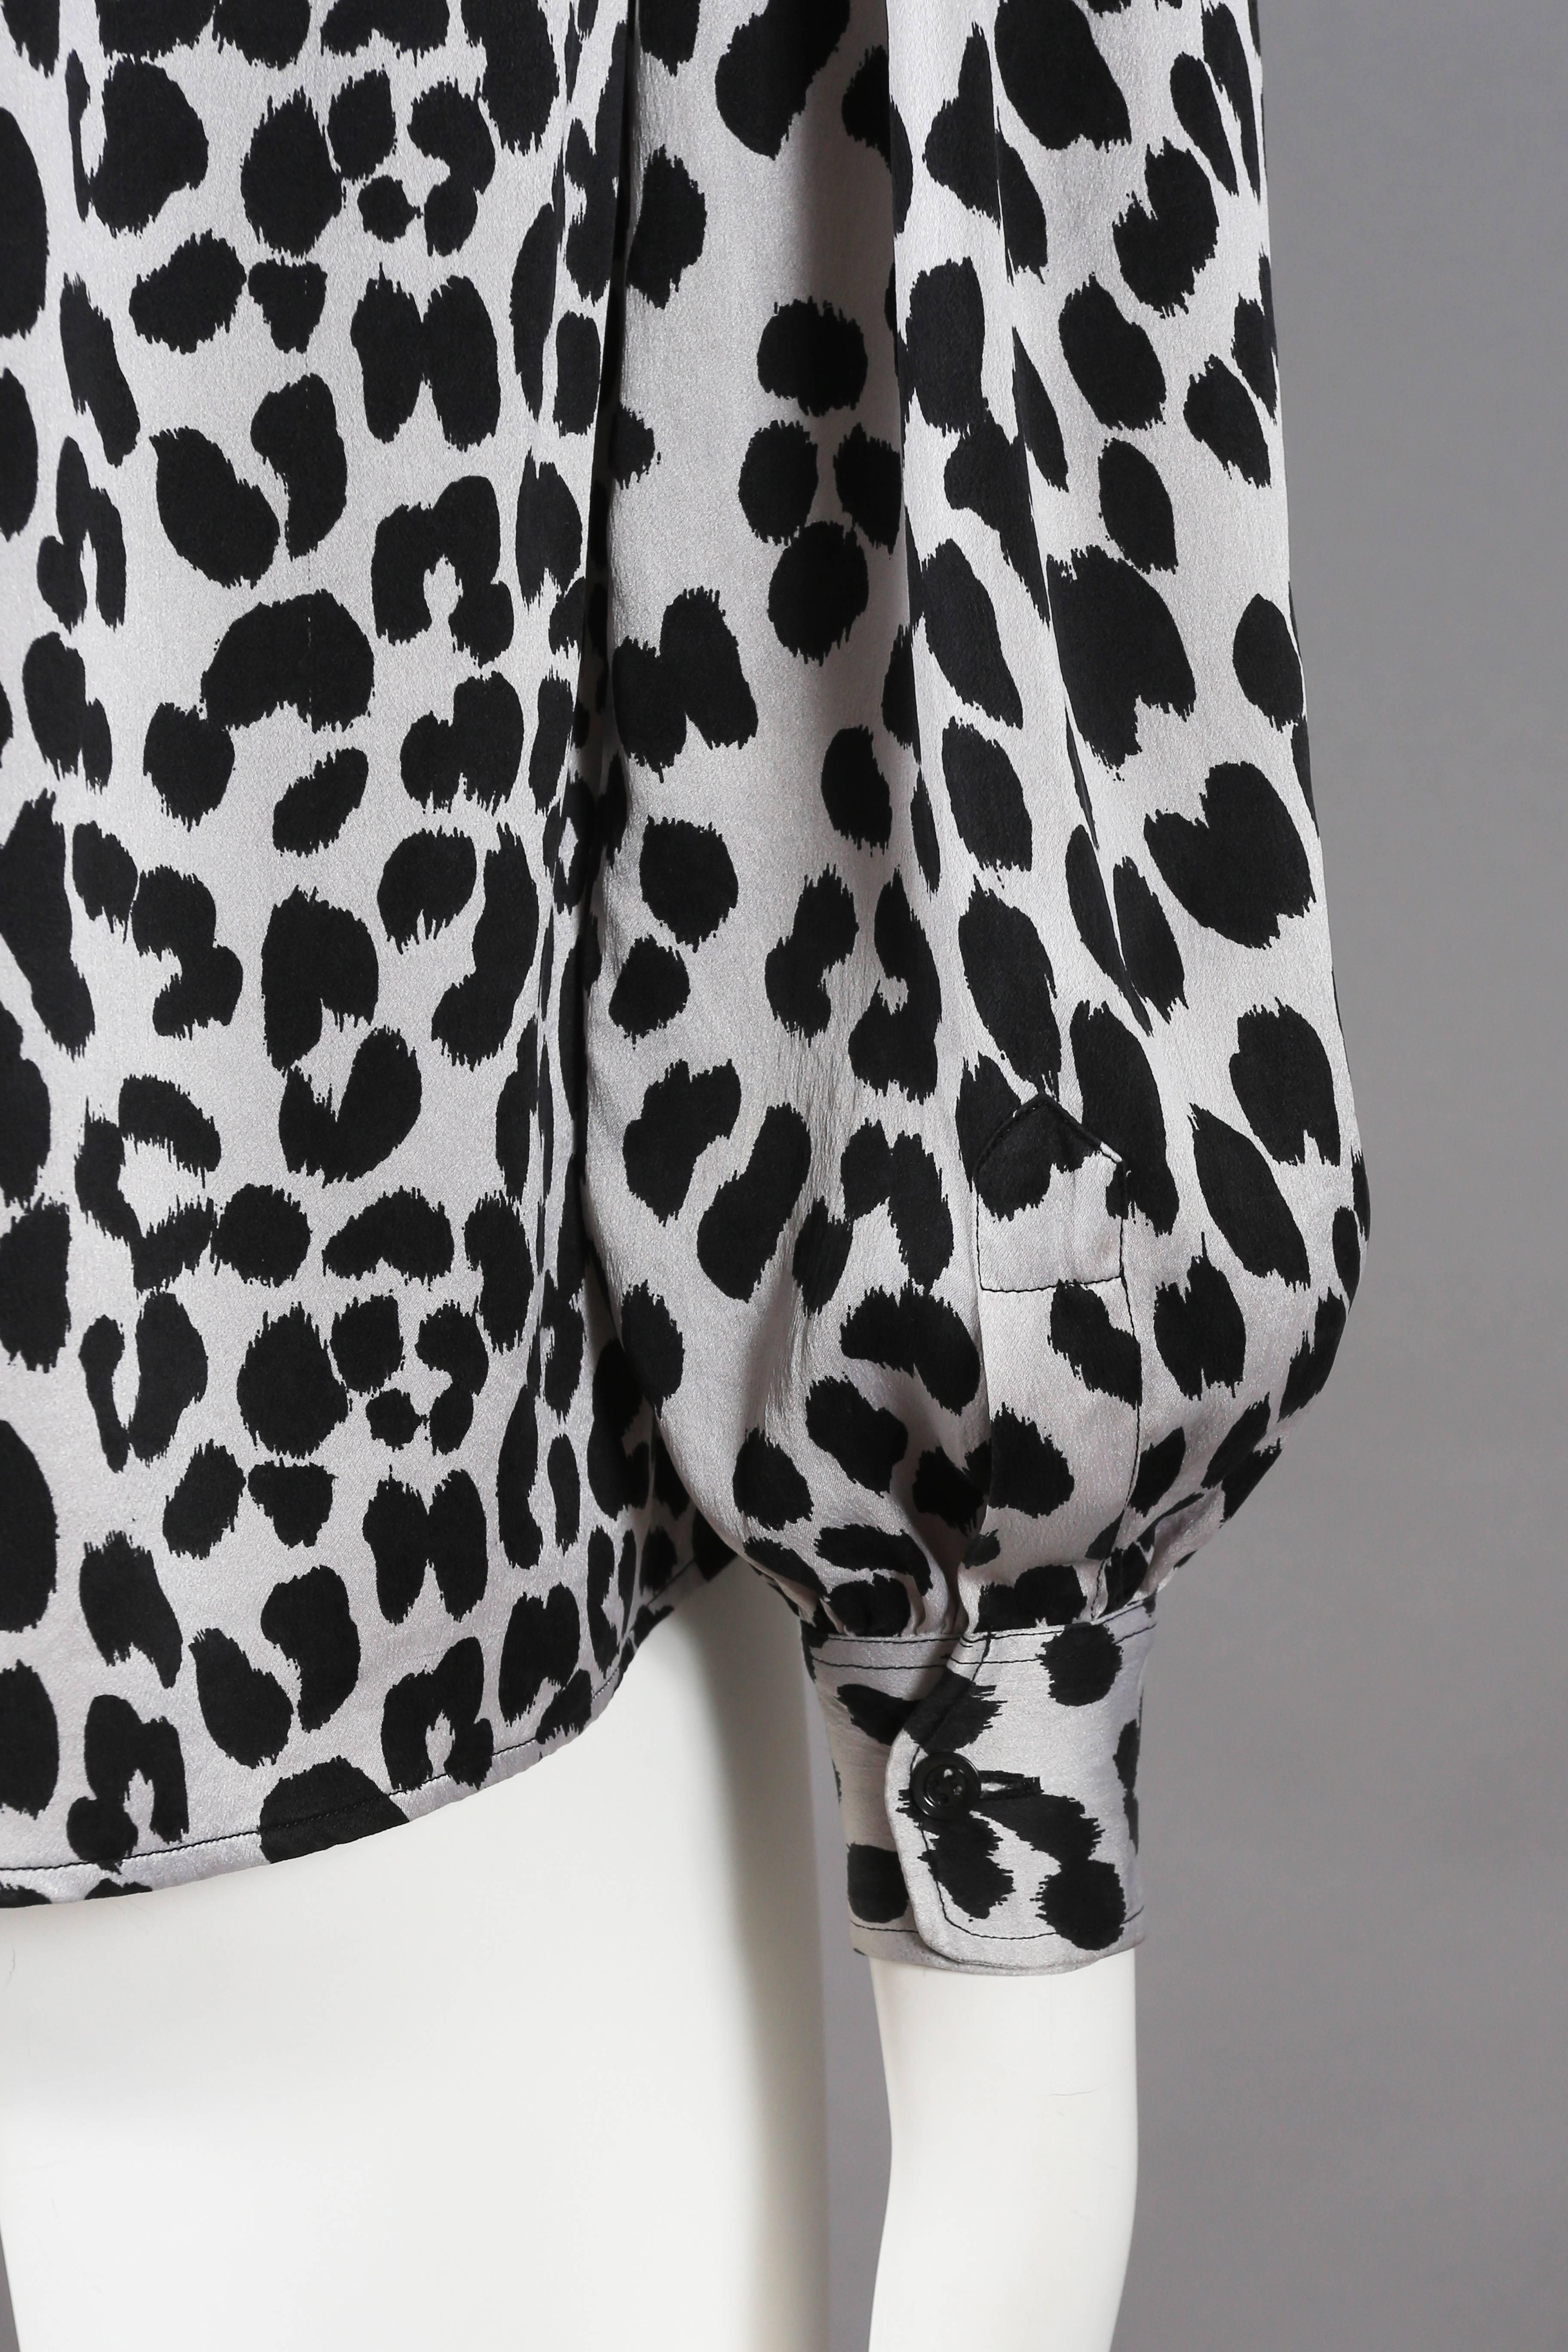 Yves Saint Laurent leopard print pussy bow silk blouse, circa 1970s 1